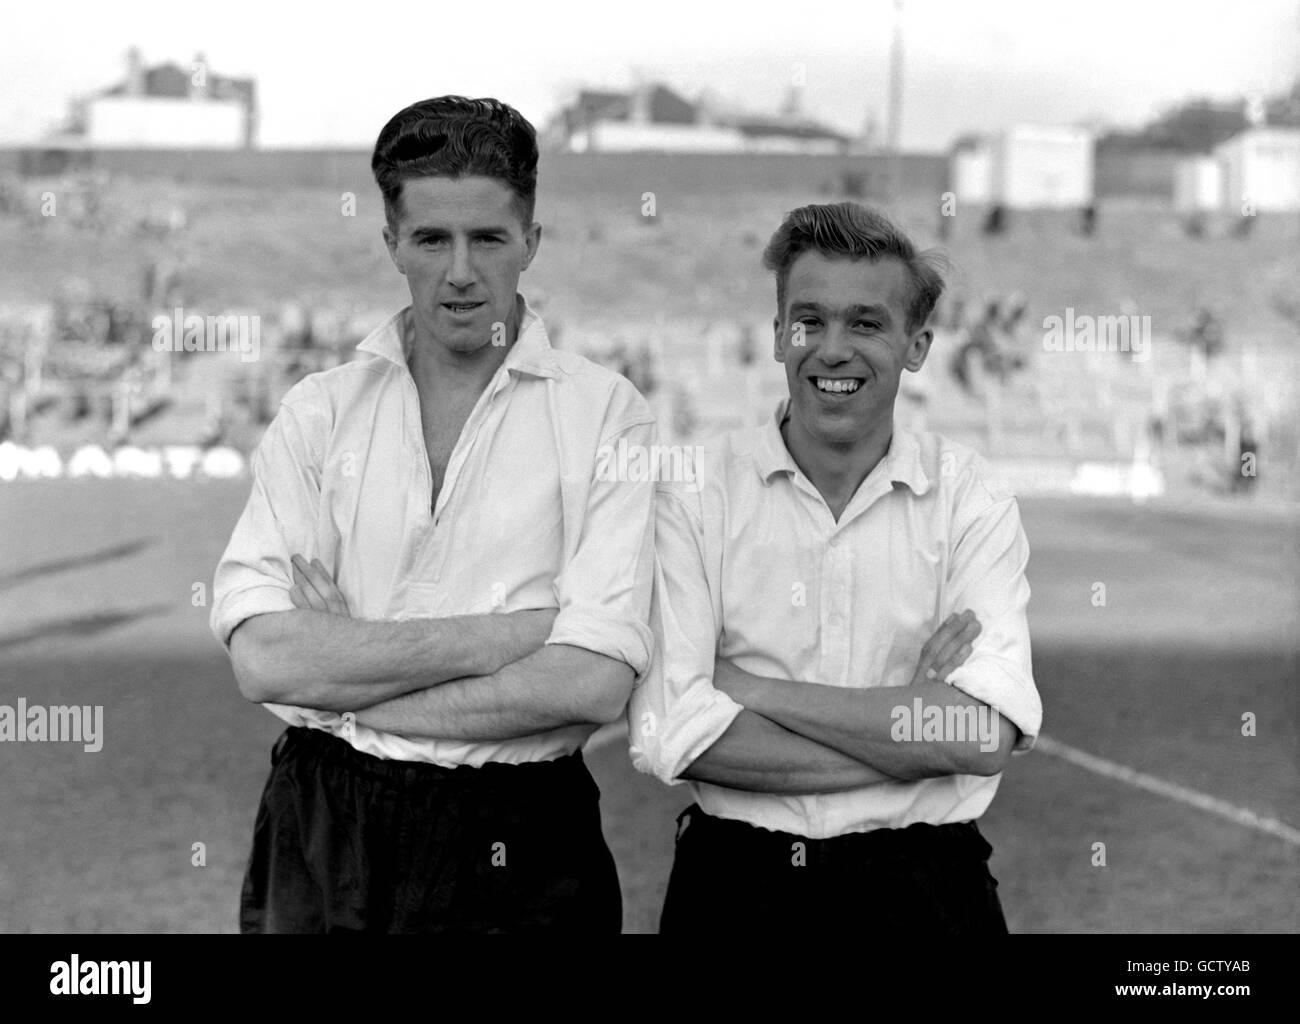 Football - Bournemouth football Club Photocall - Dean court.Frank Fidler, à gauche, et Joseph Brown, Bournemouth FC Banque D'Images